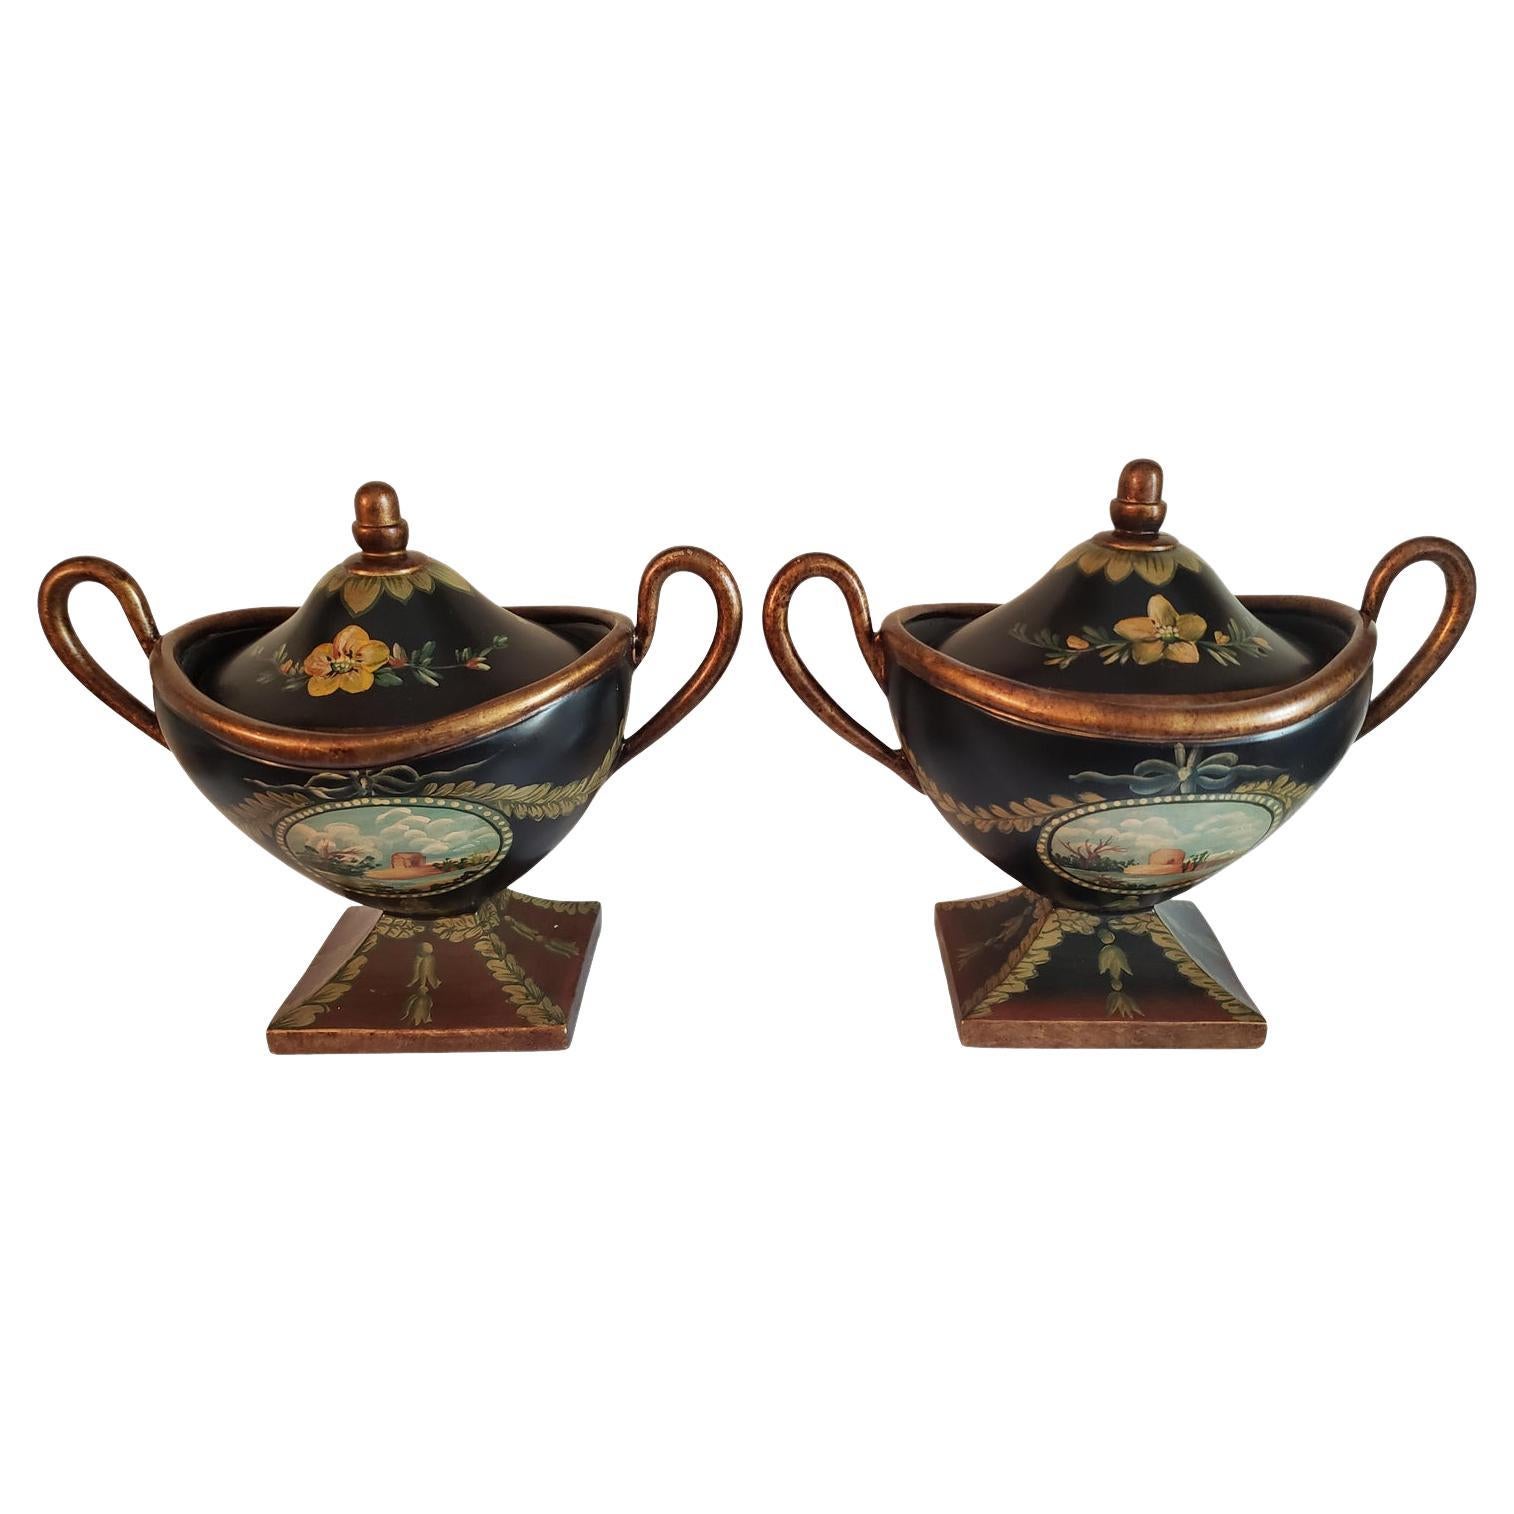 Vintage 1950s Hand Painted Decorative Ceramic Urns, a Pair